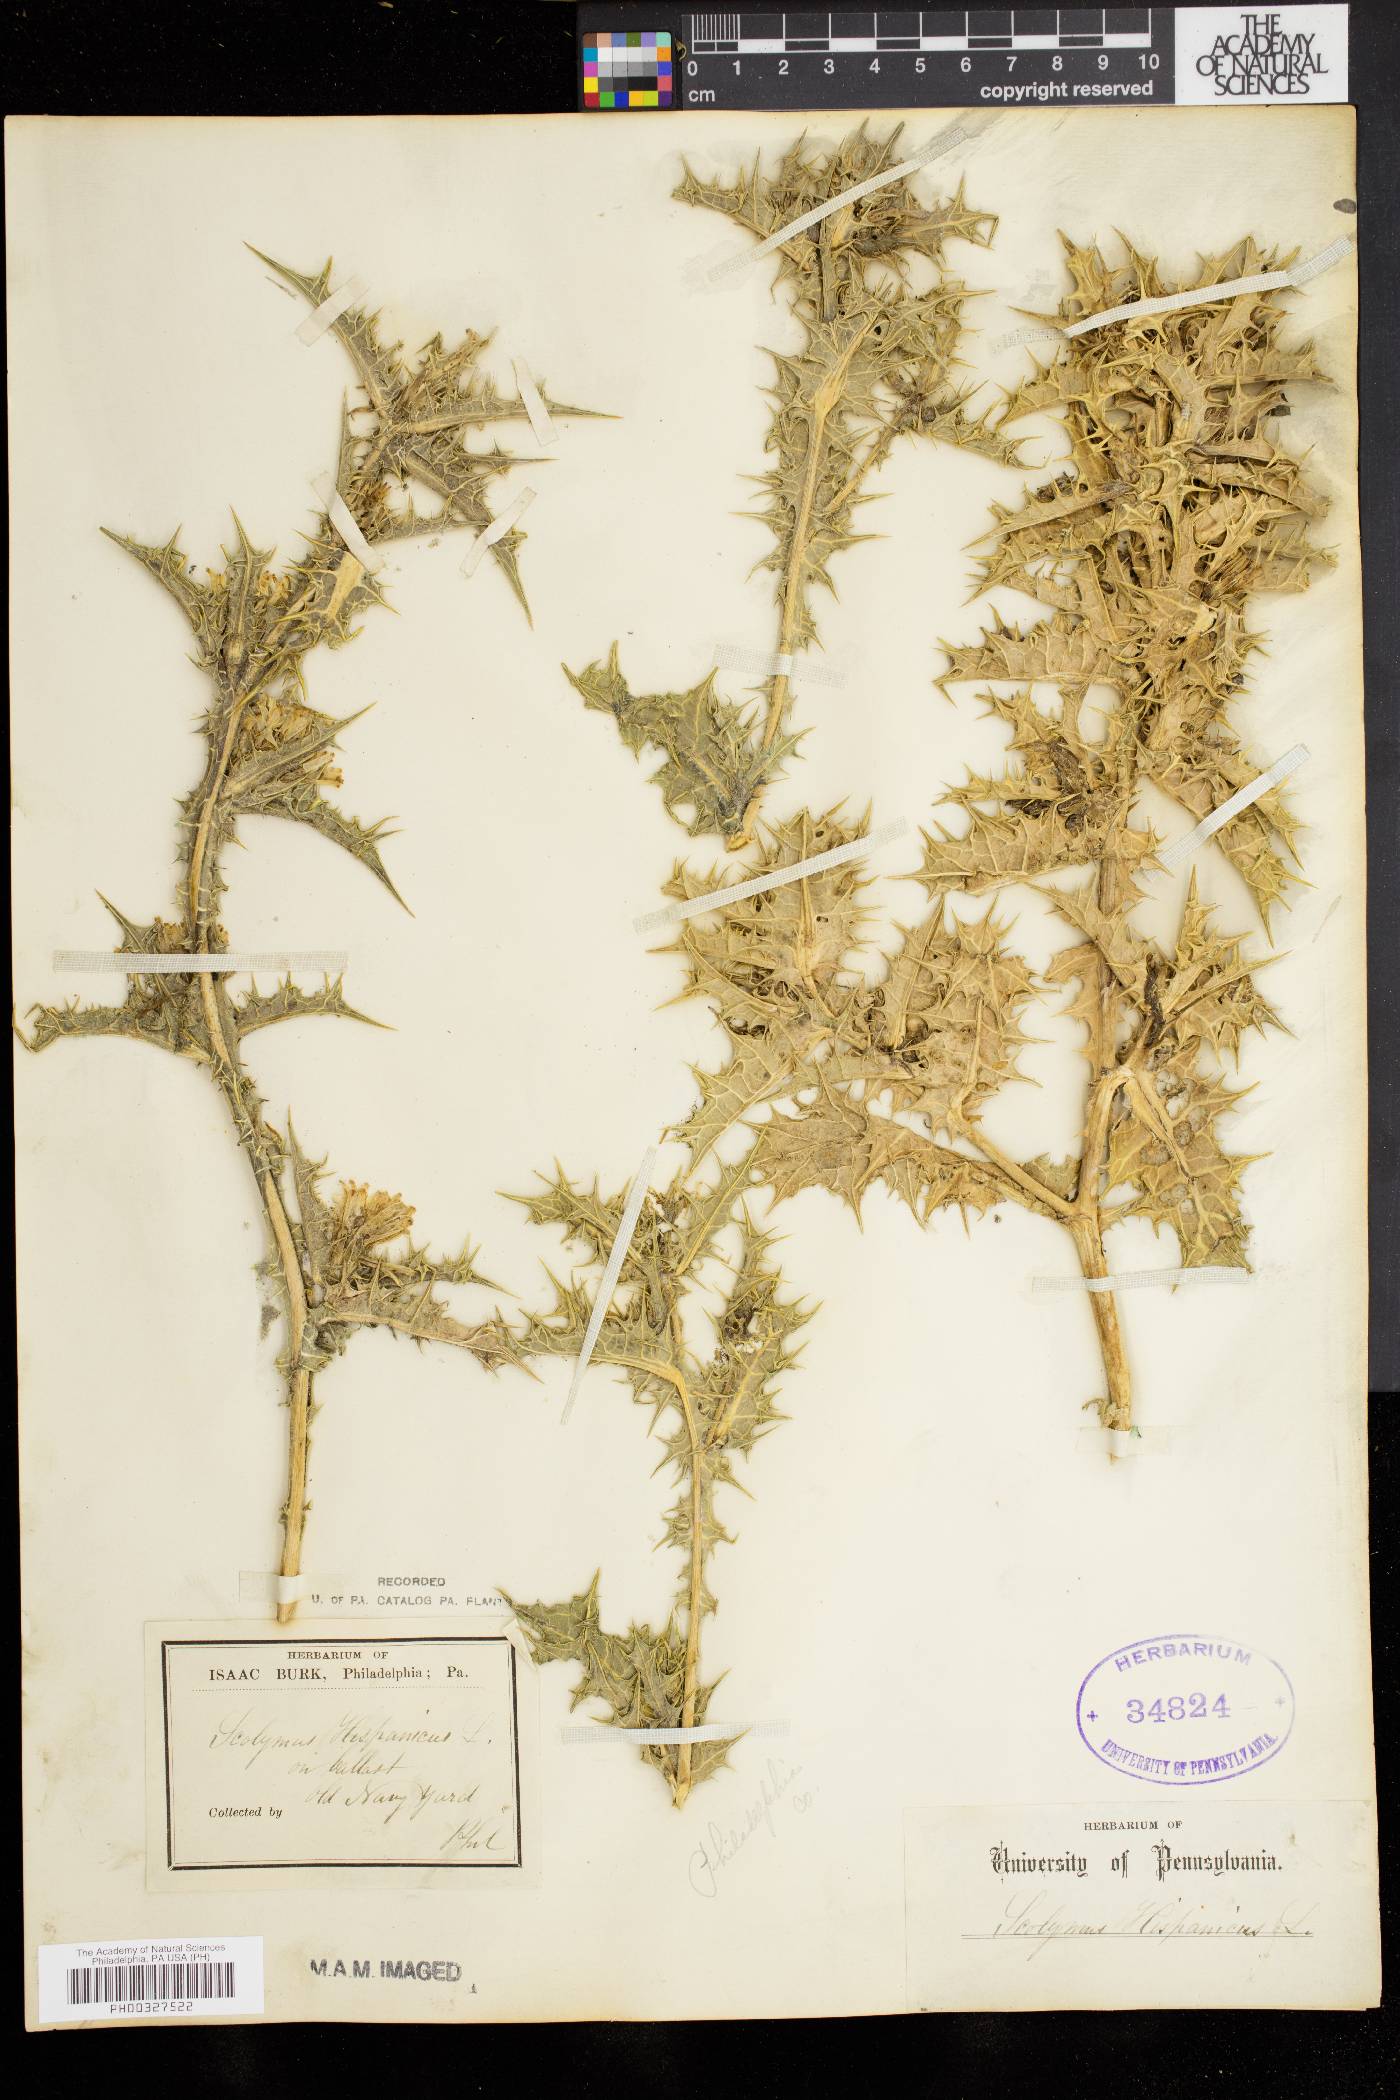 Scolymus hispanicus image